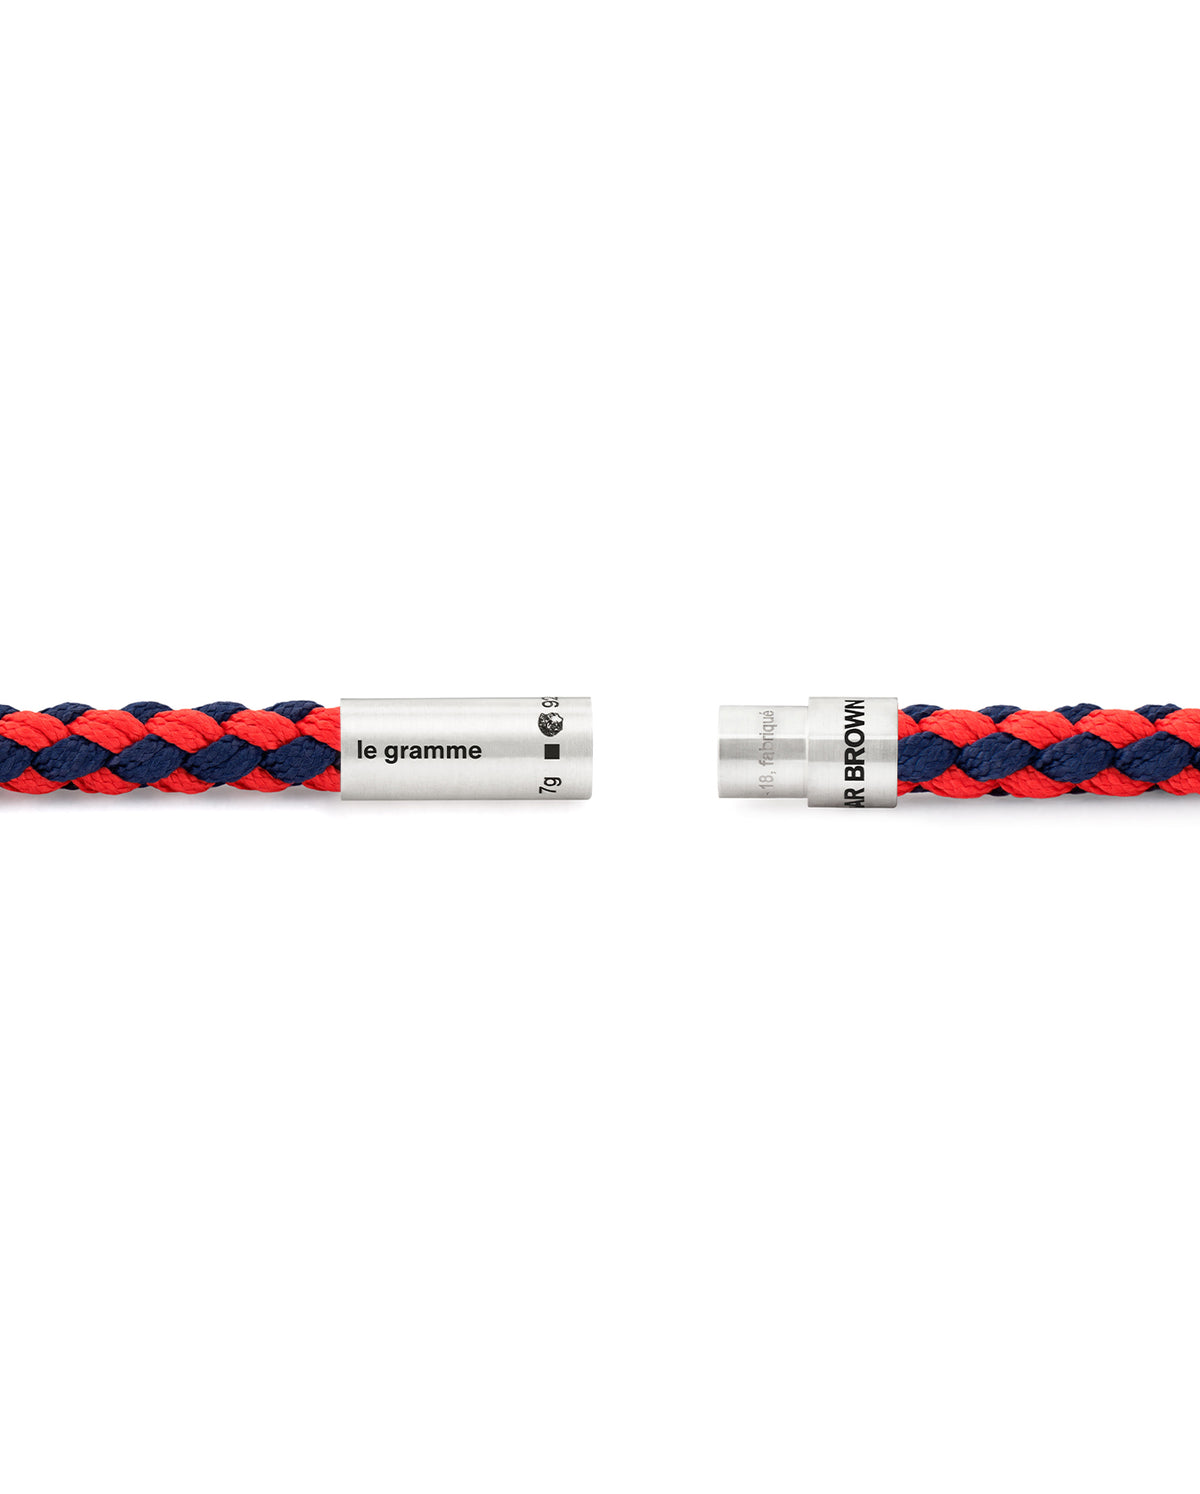 Orlebar Brown Nato Cable Bracelet LE 7G - Navy/Red